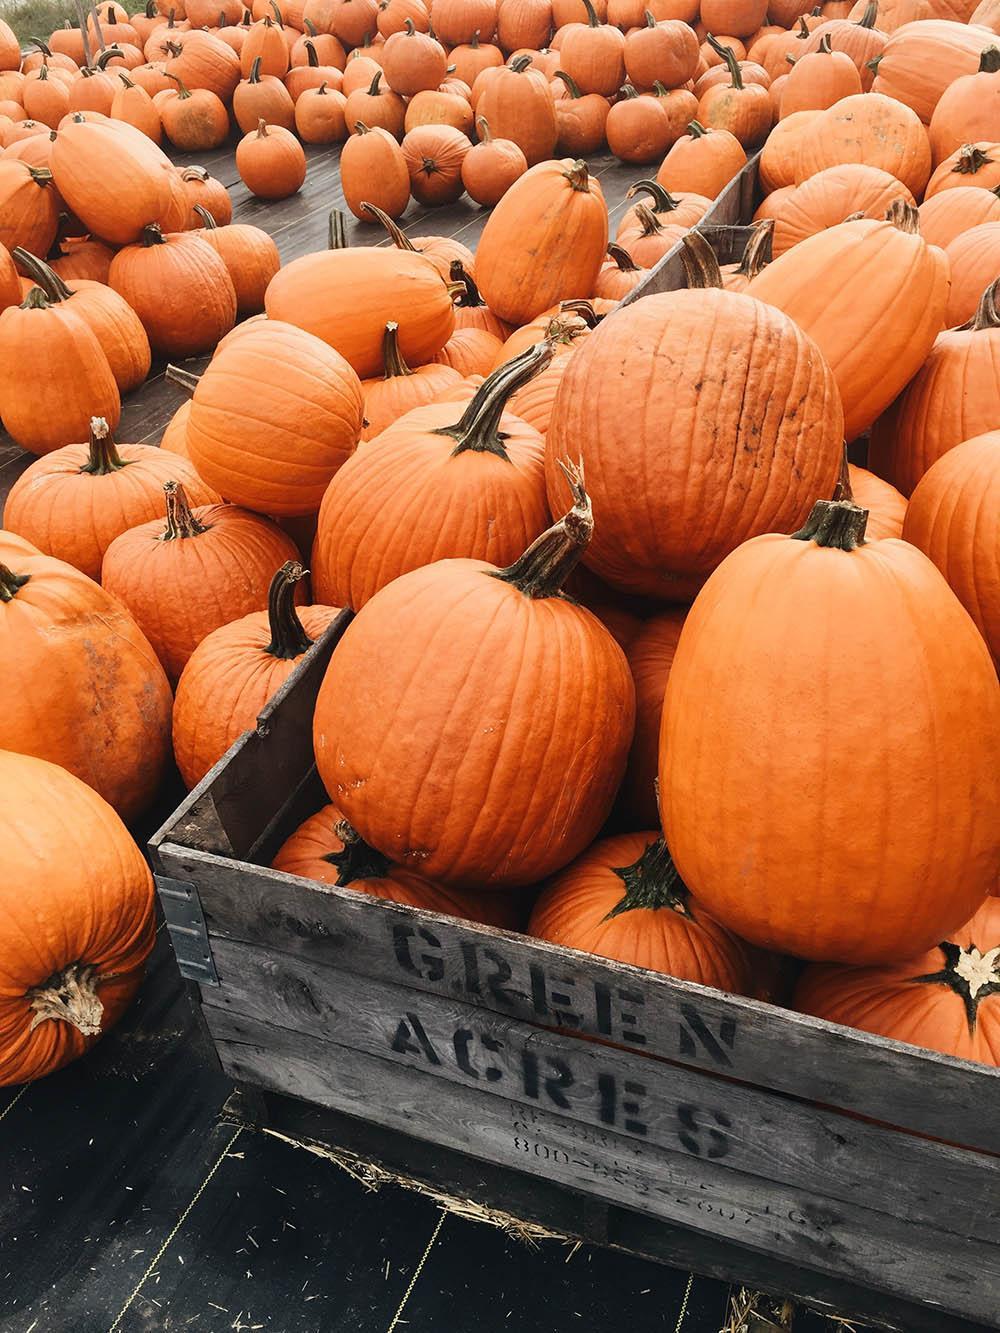 A cart full of pumpkins.